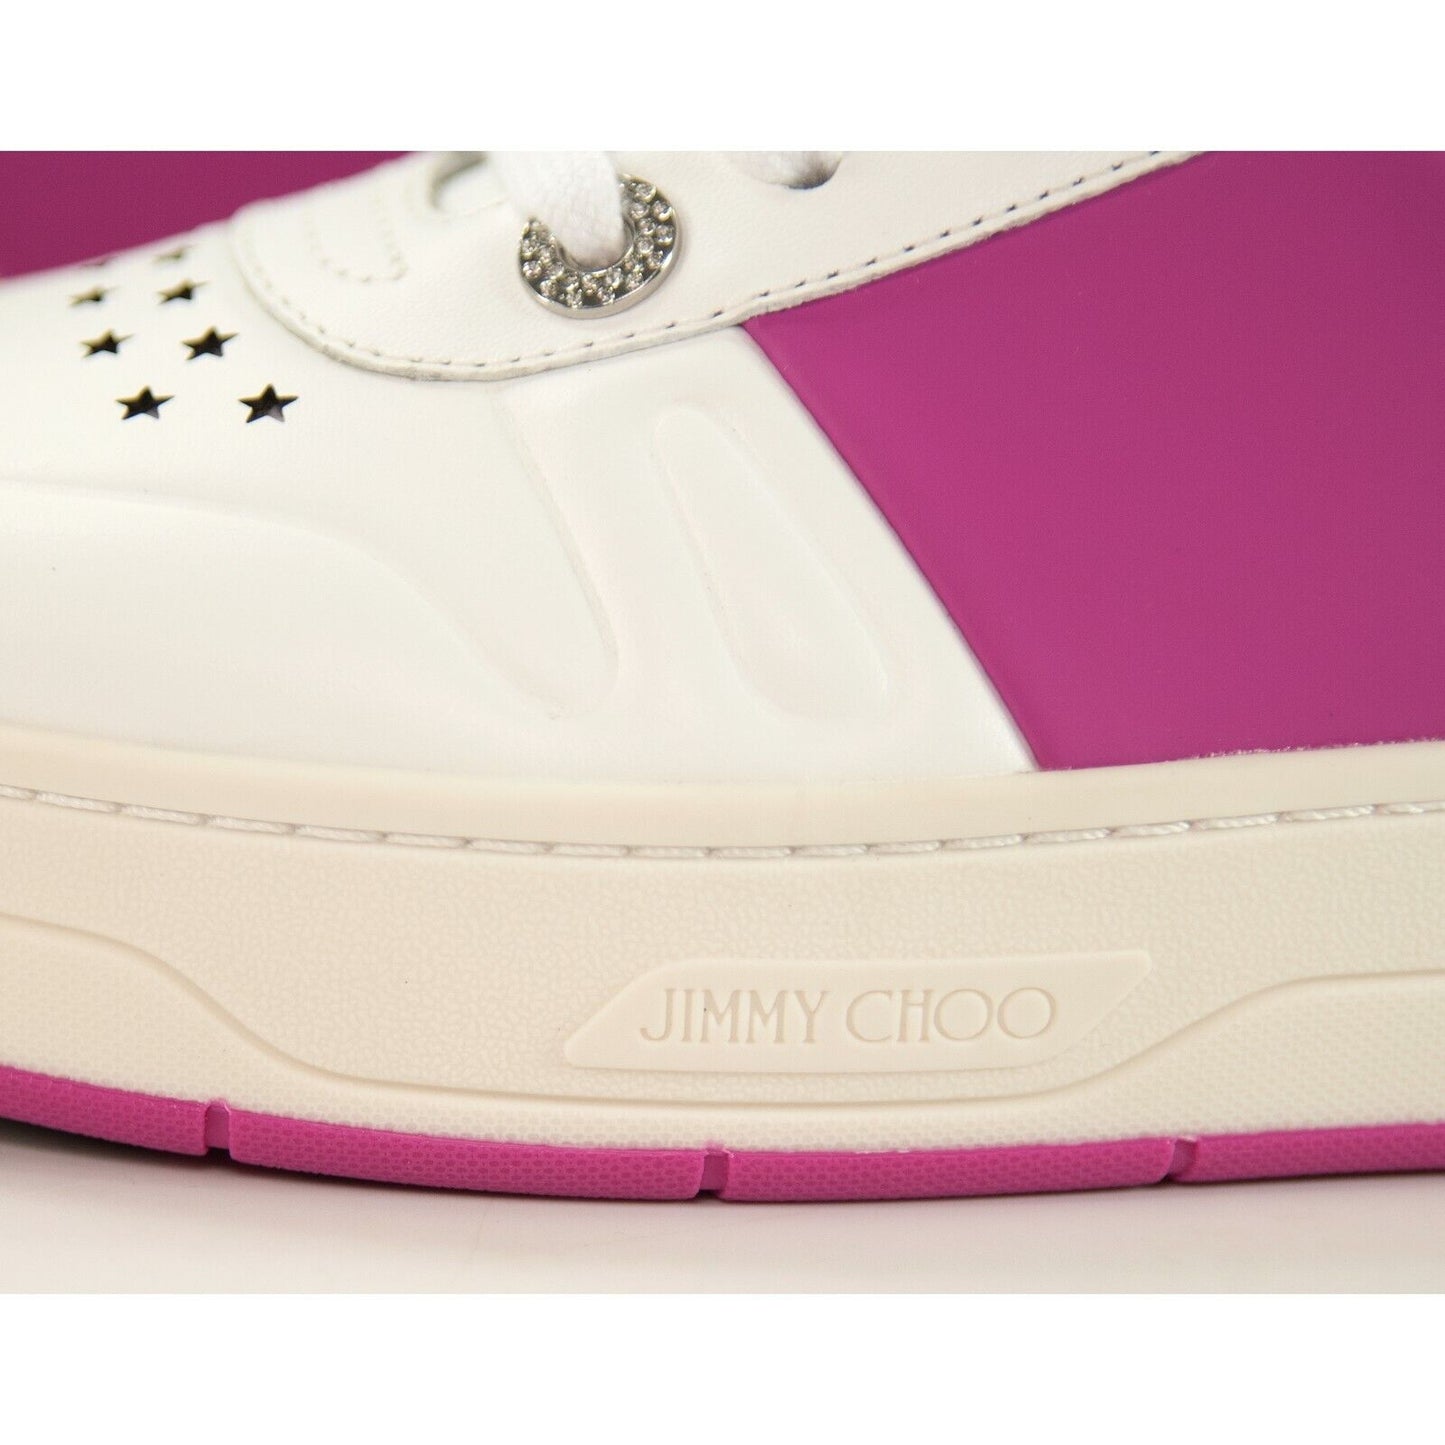 Jimmy Choo Hawaii Fuchsia Stripe Leather Flatform Sneakers 37 NIB